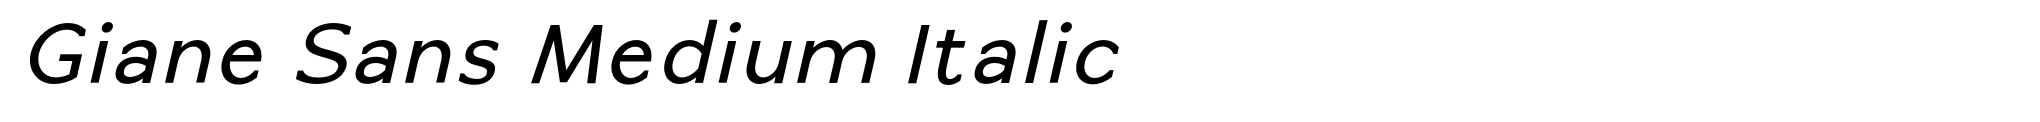 Giane Sans Medium Italic image